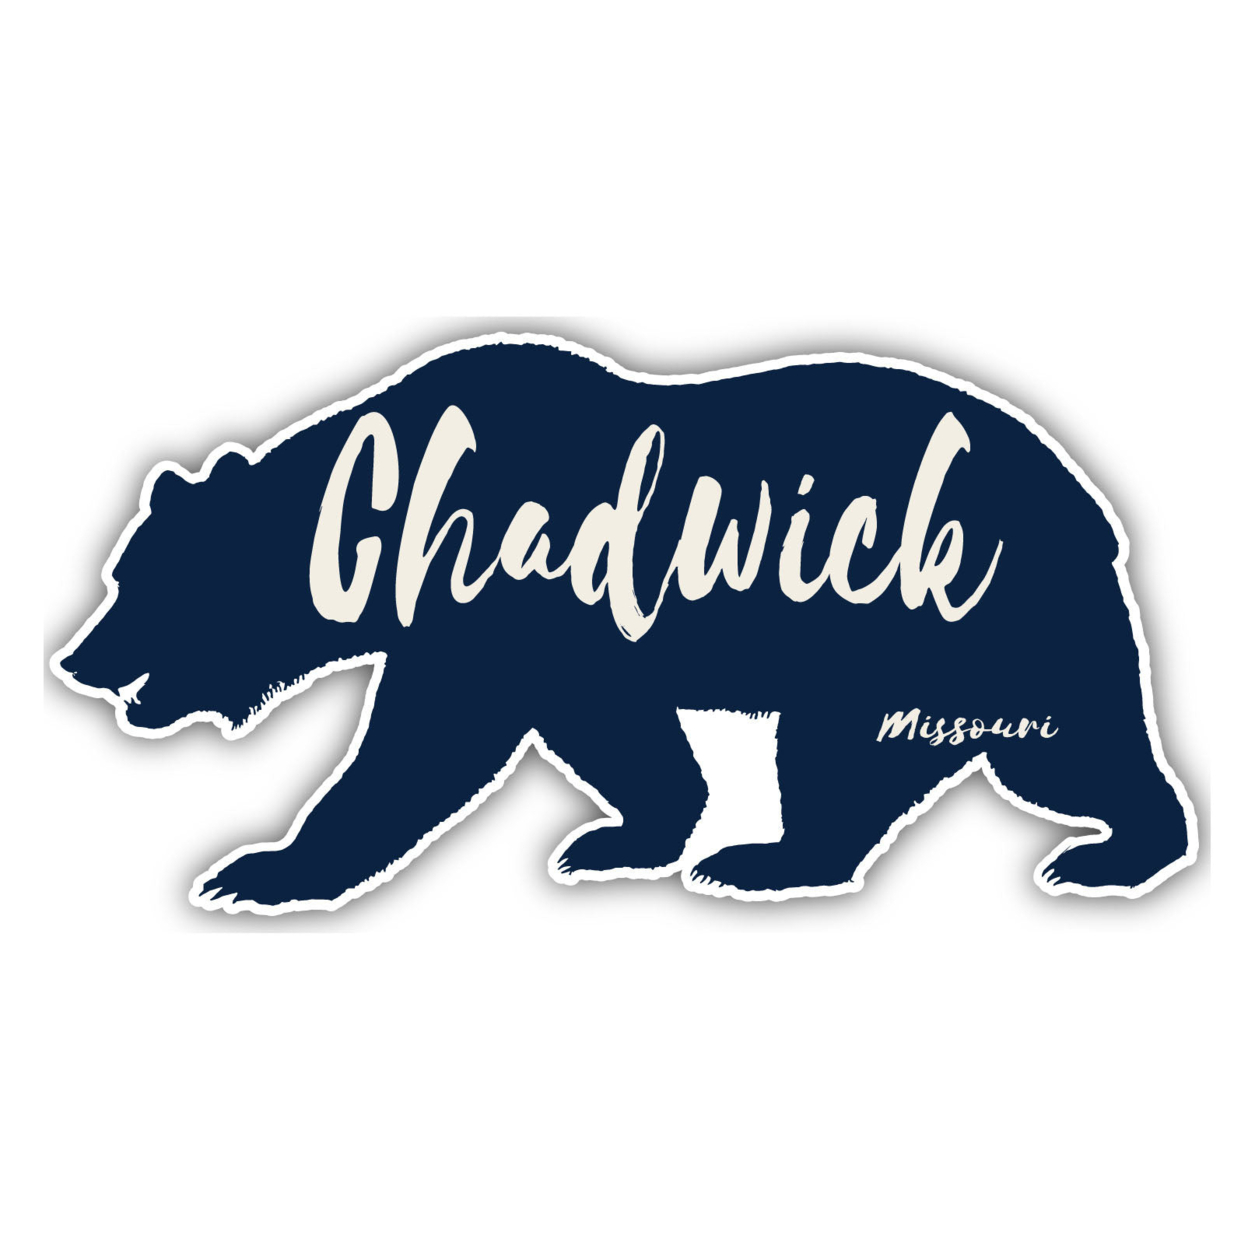 Chadwick Missouri Souvenir Decorative Stickers (Choose Theme And Size) - Single Unit, 8-Inch, Tent